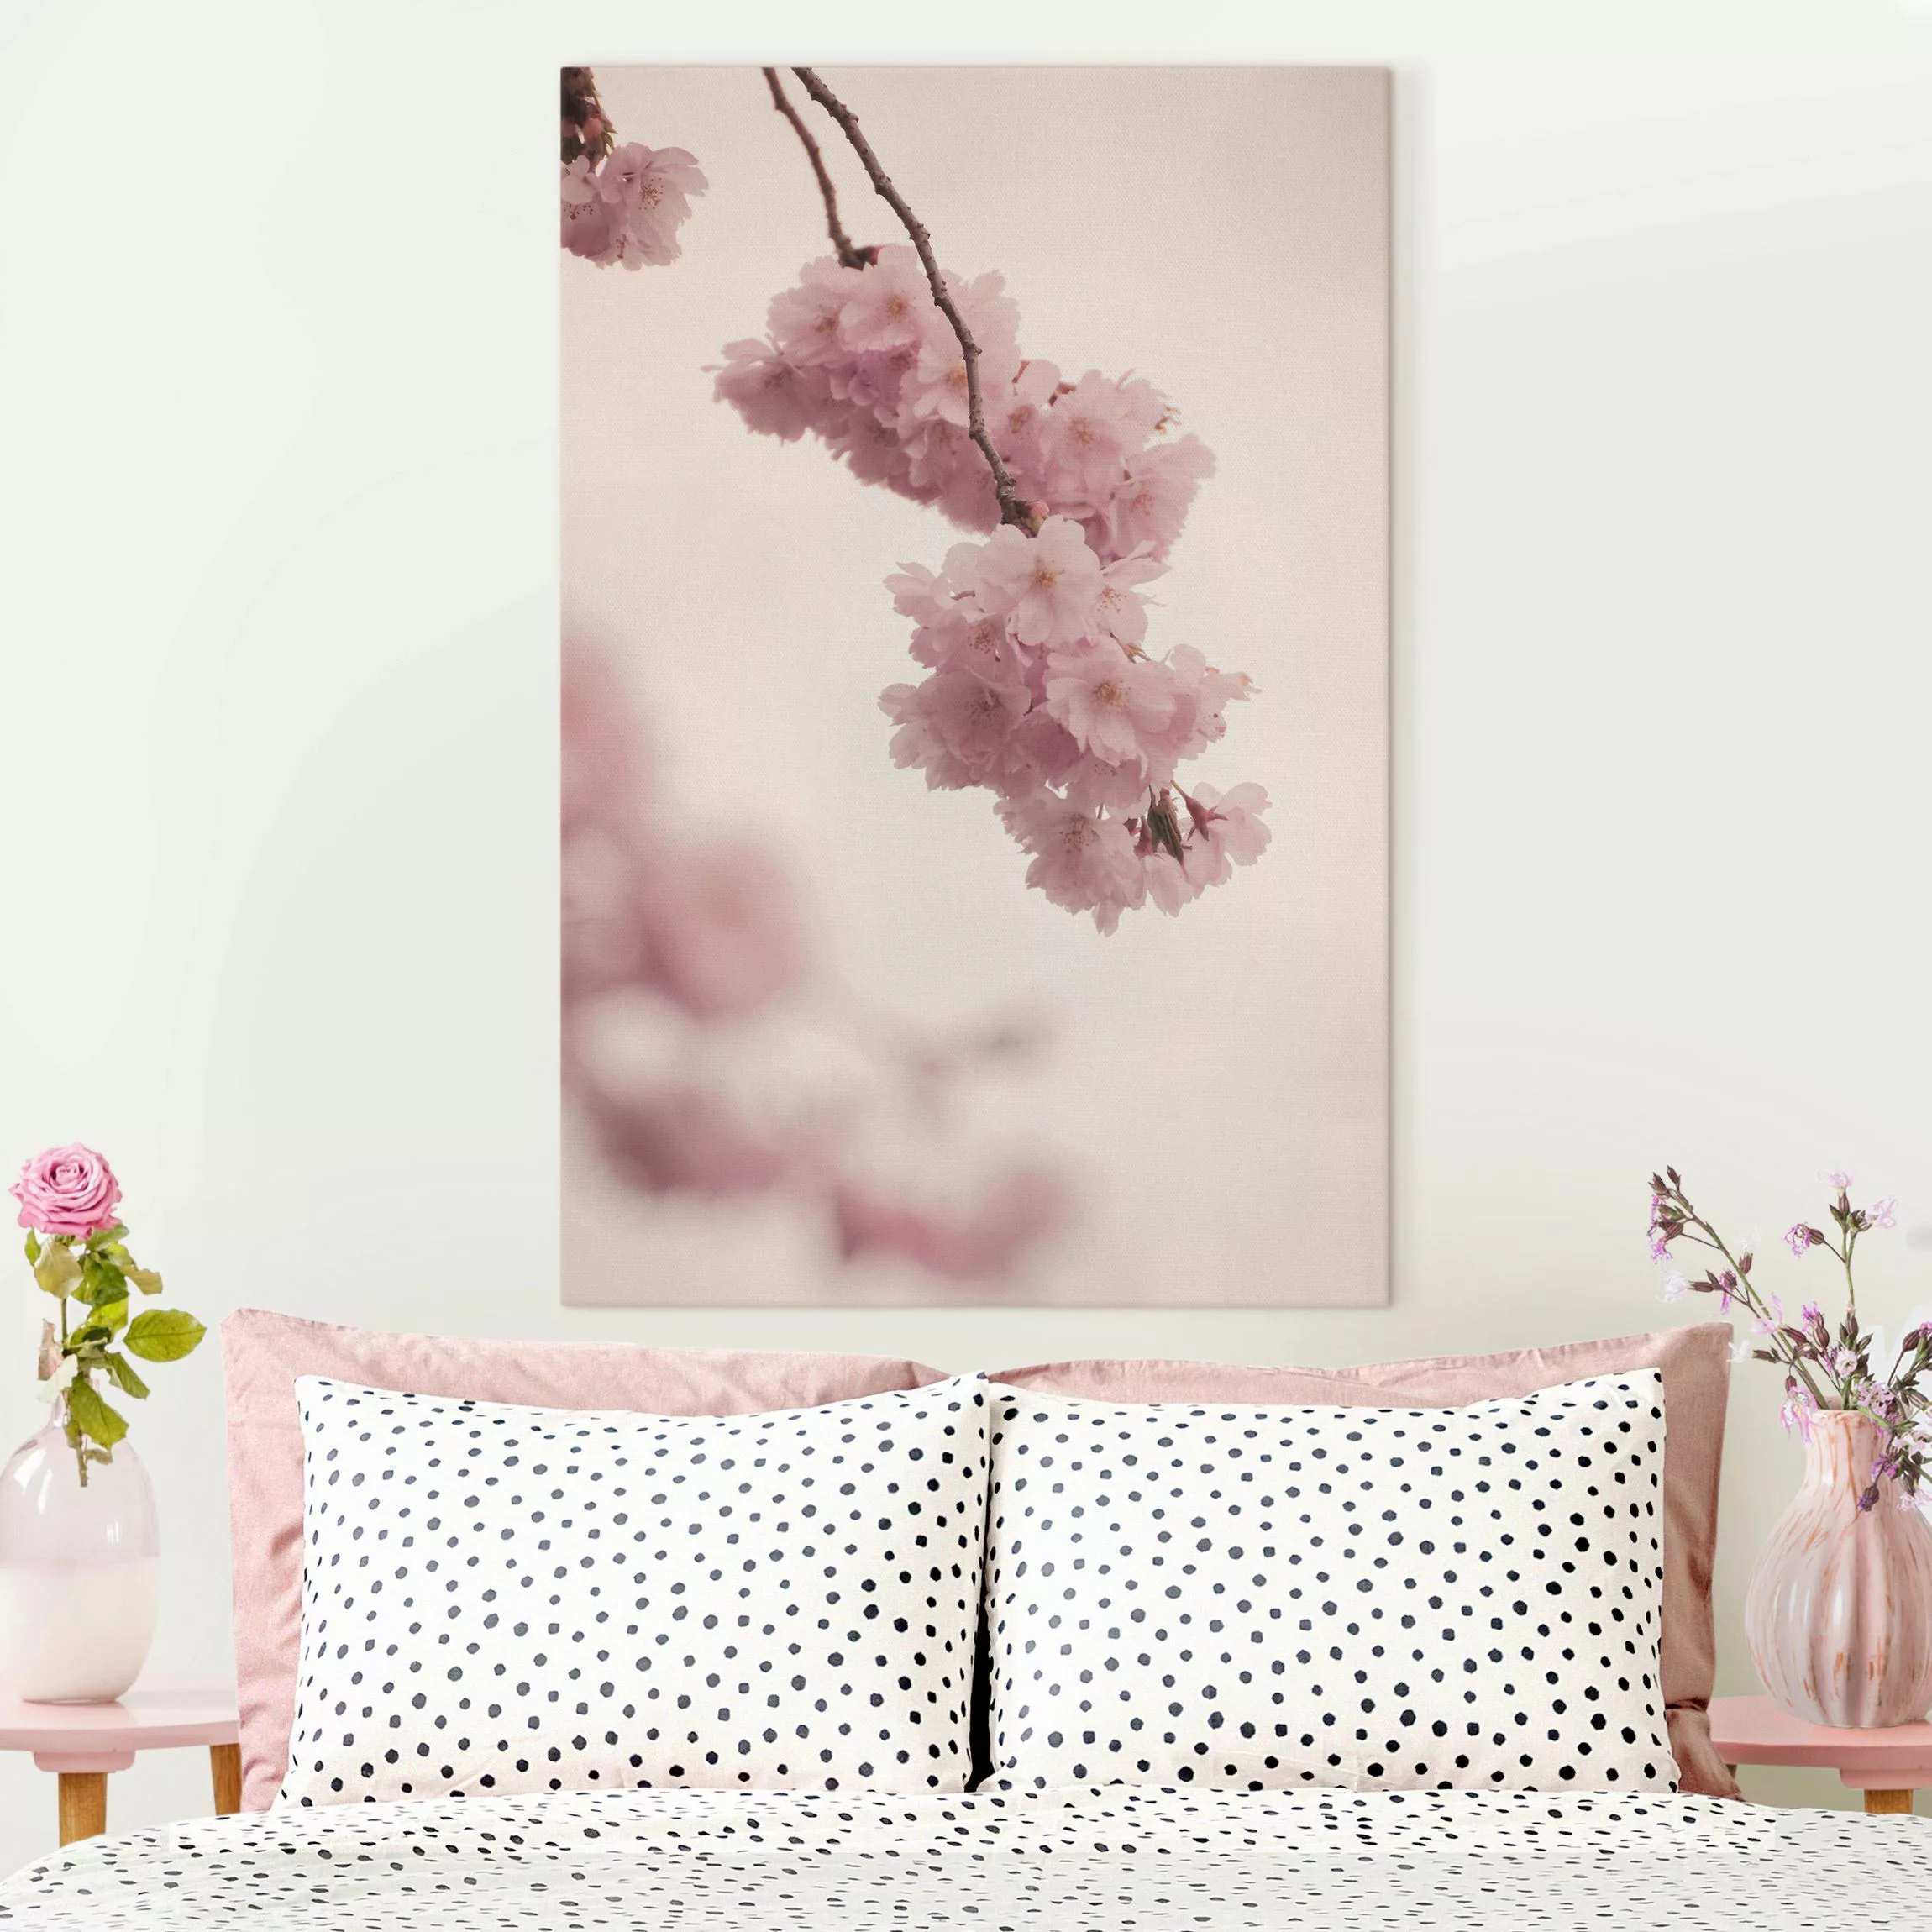 Leinwandbild Zartrosane Frühlingsblüte mit Bokeh günstig online kaufen